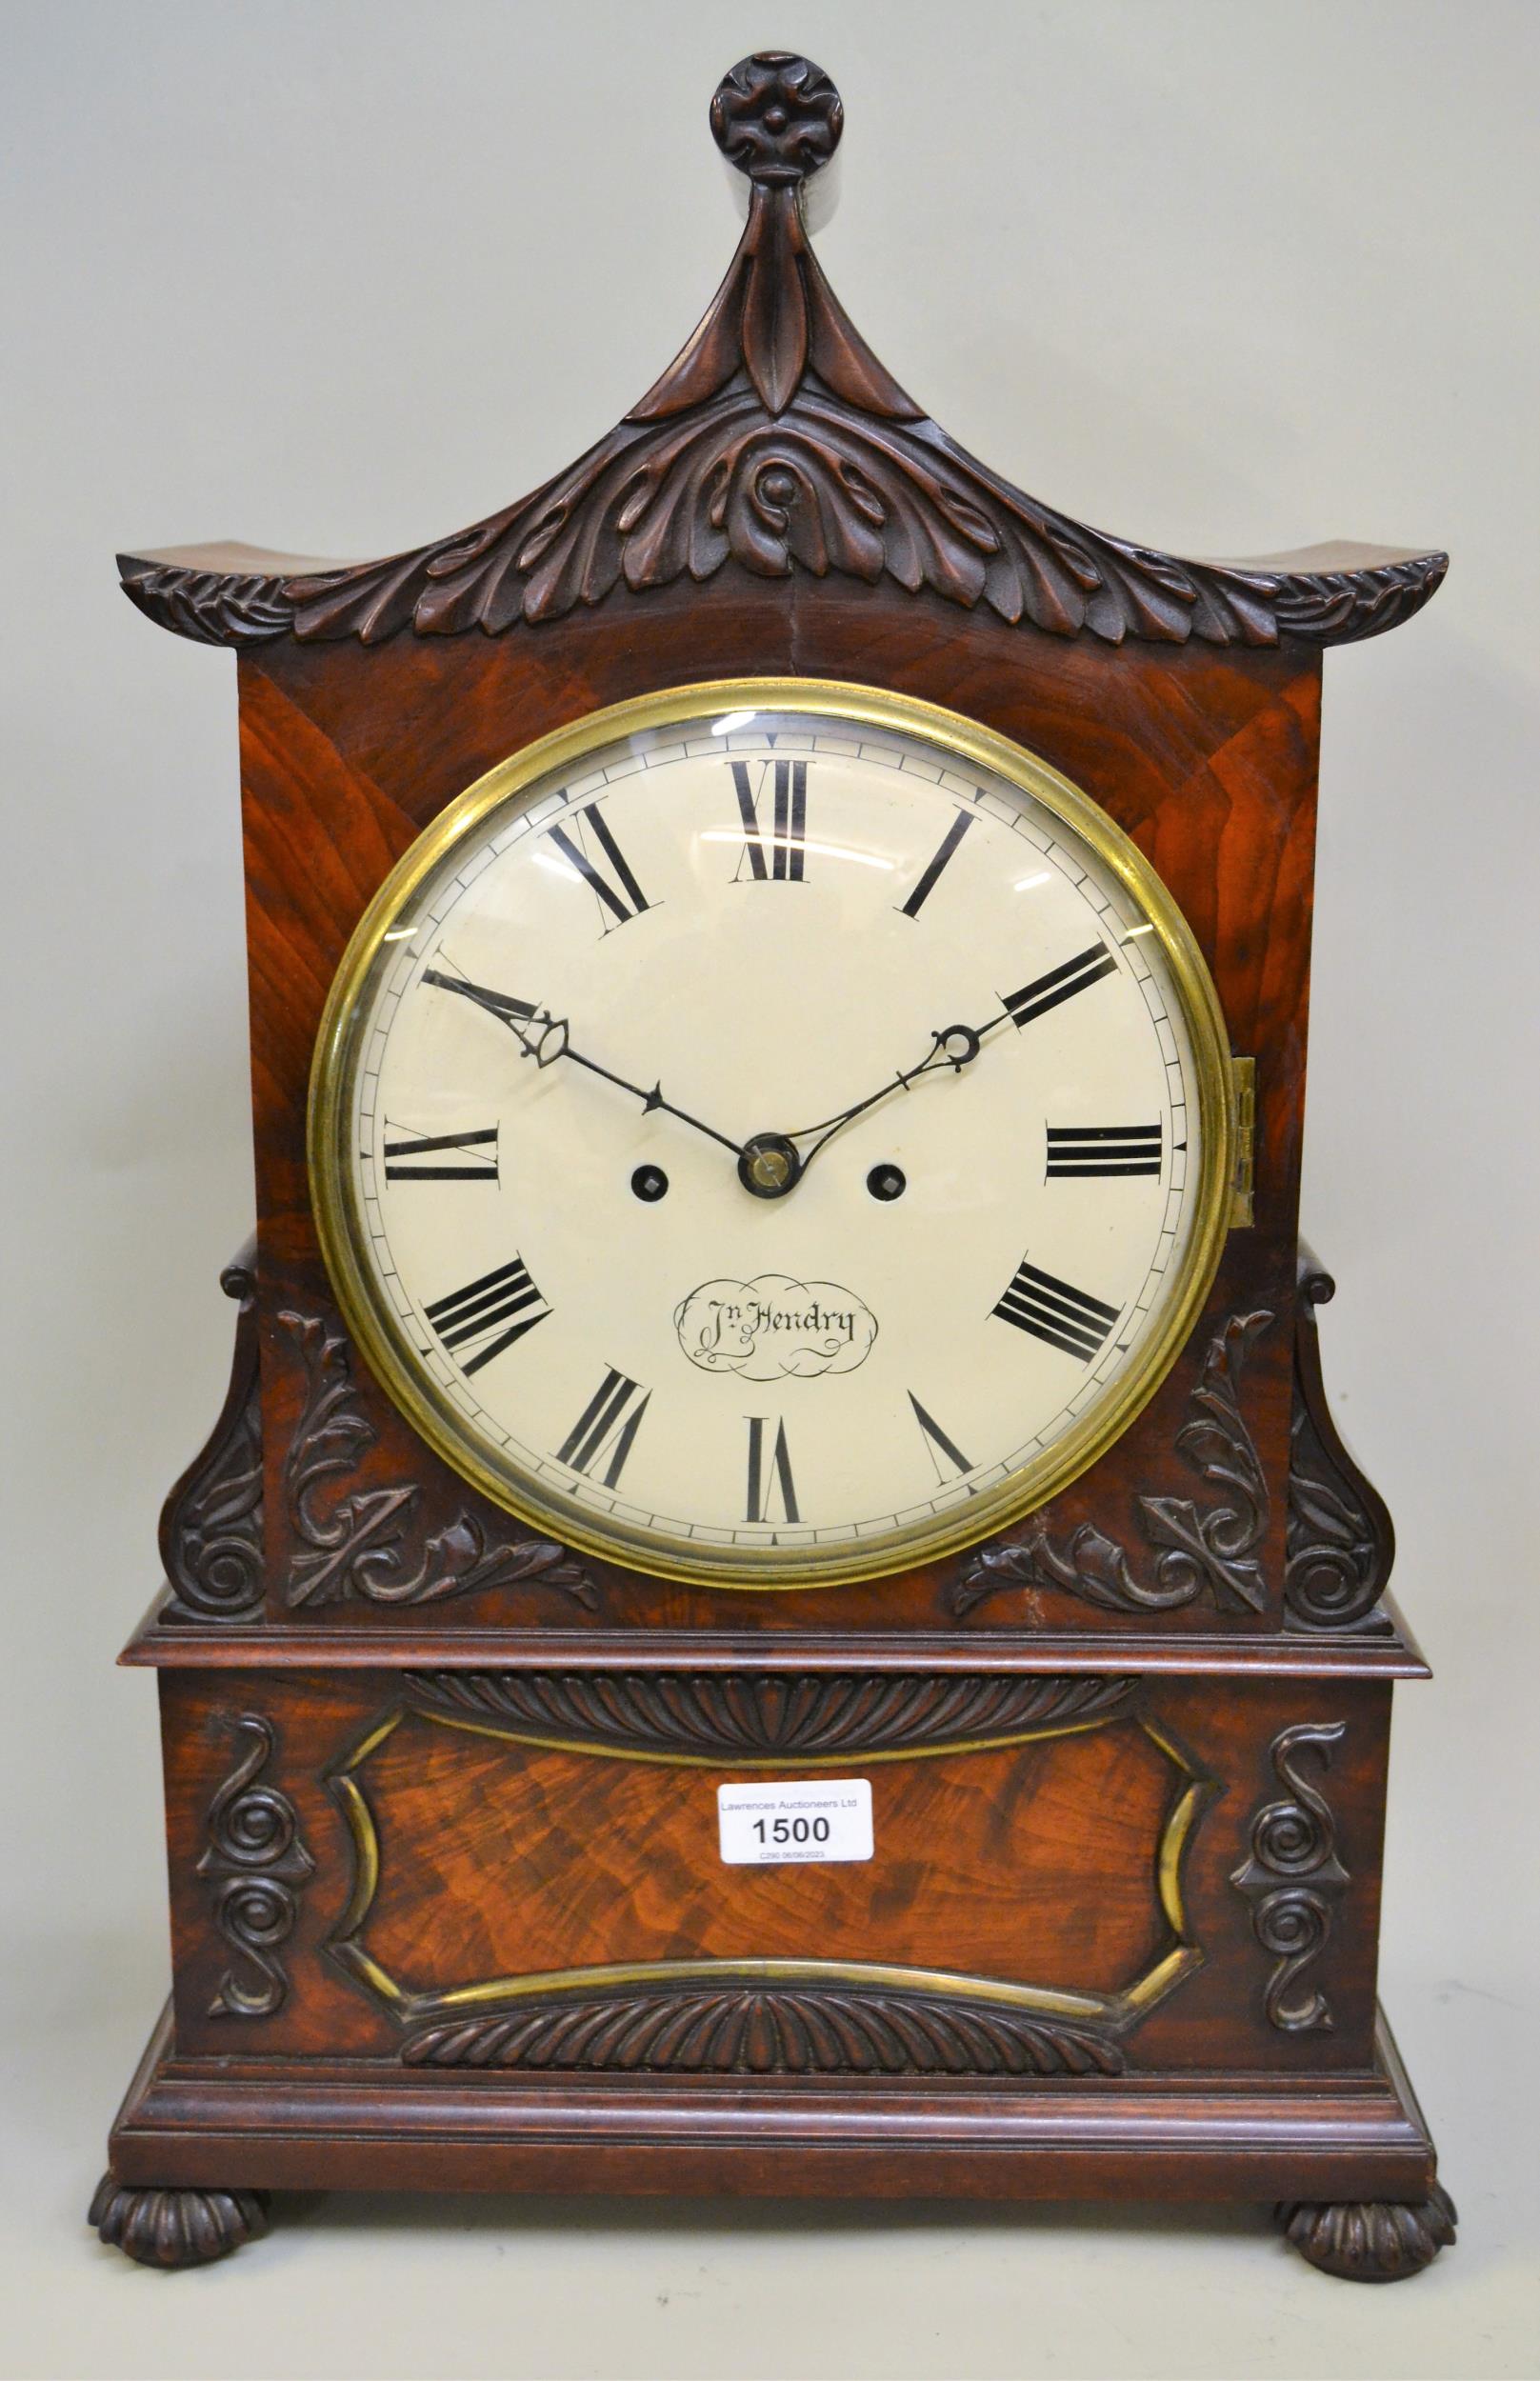 19th Century flame mahogany pagoda topped bracket clock having circular painted dial, with Roman